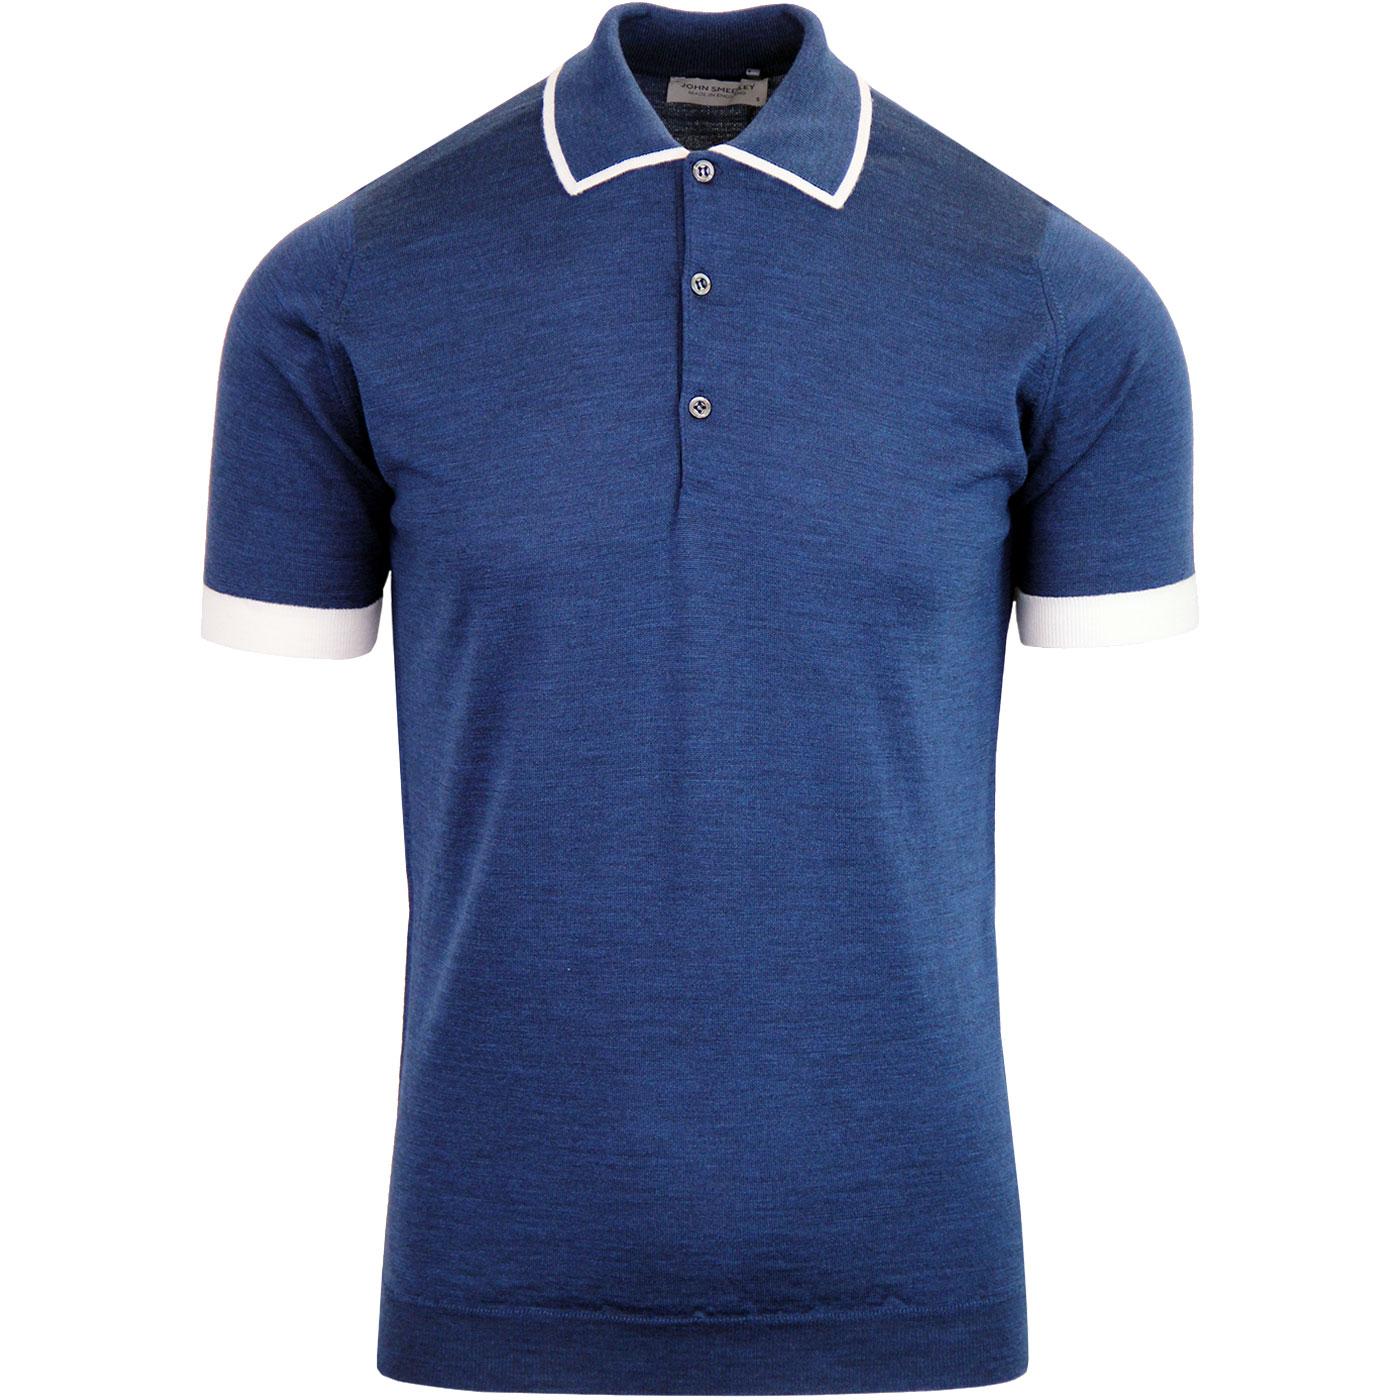 Nailsea JOHN SMEDLEY Men's Mod Tipped Polo Shirt I